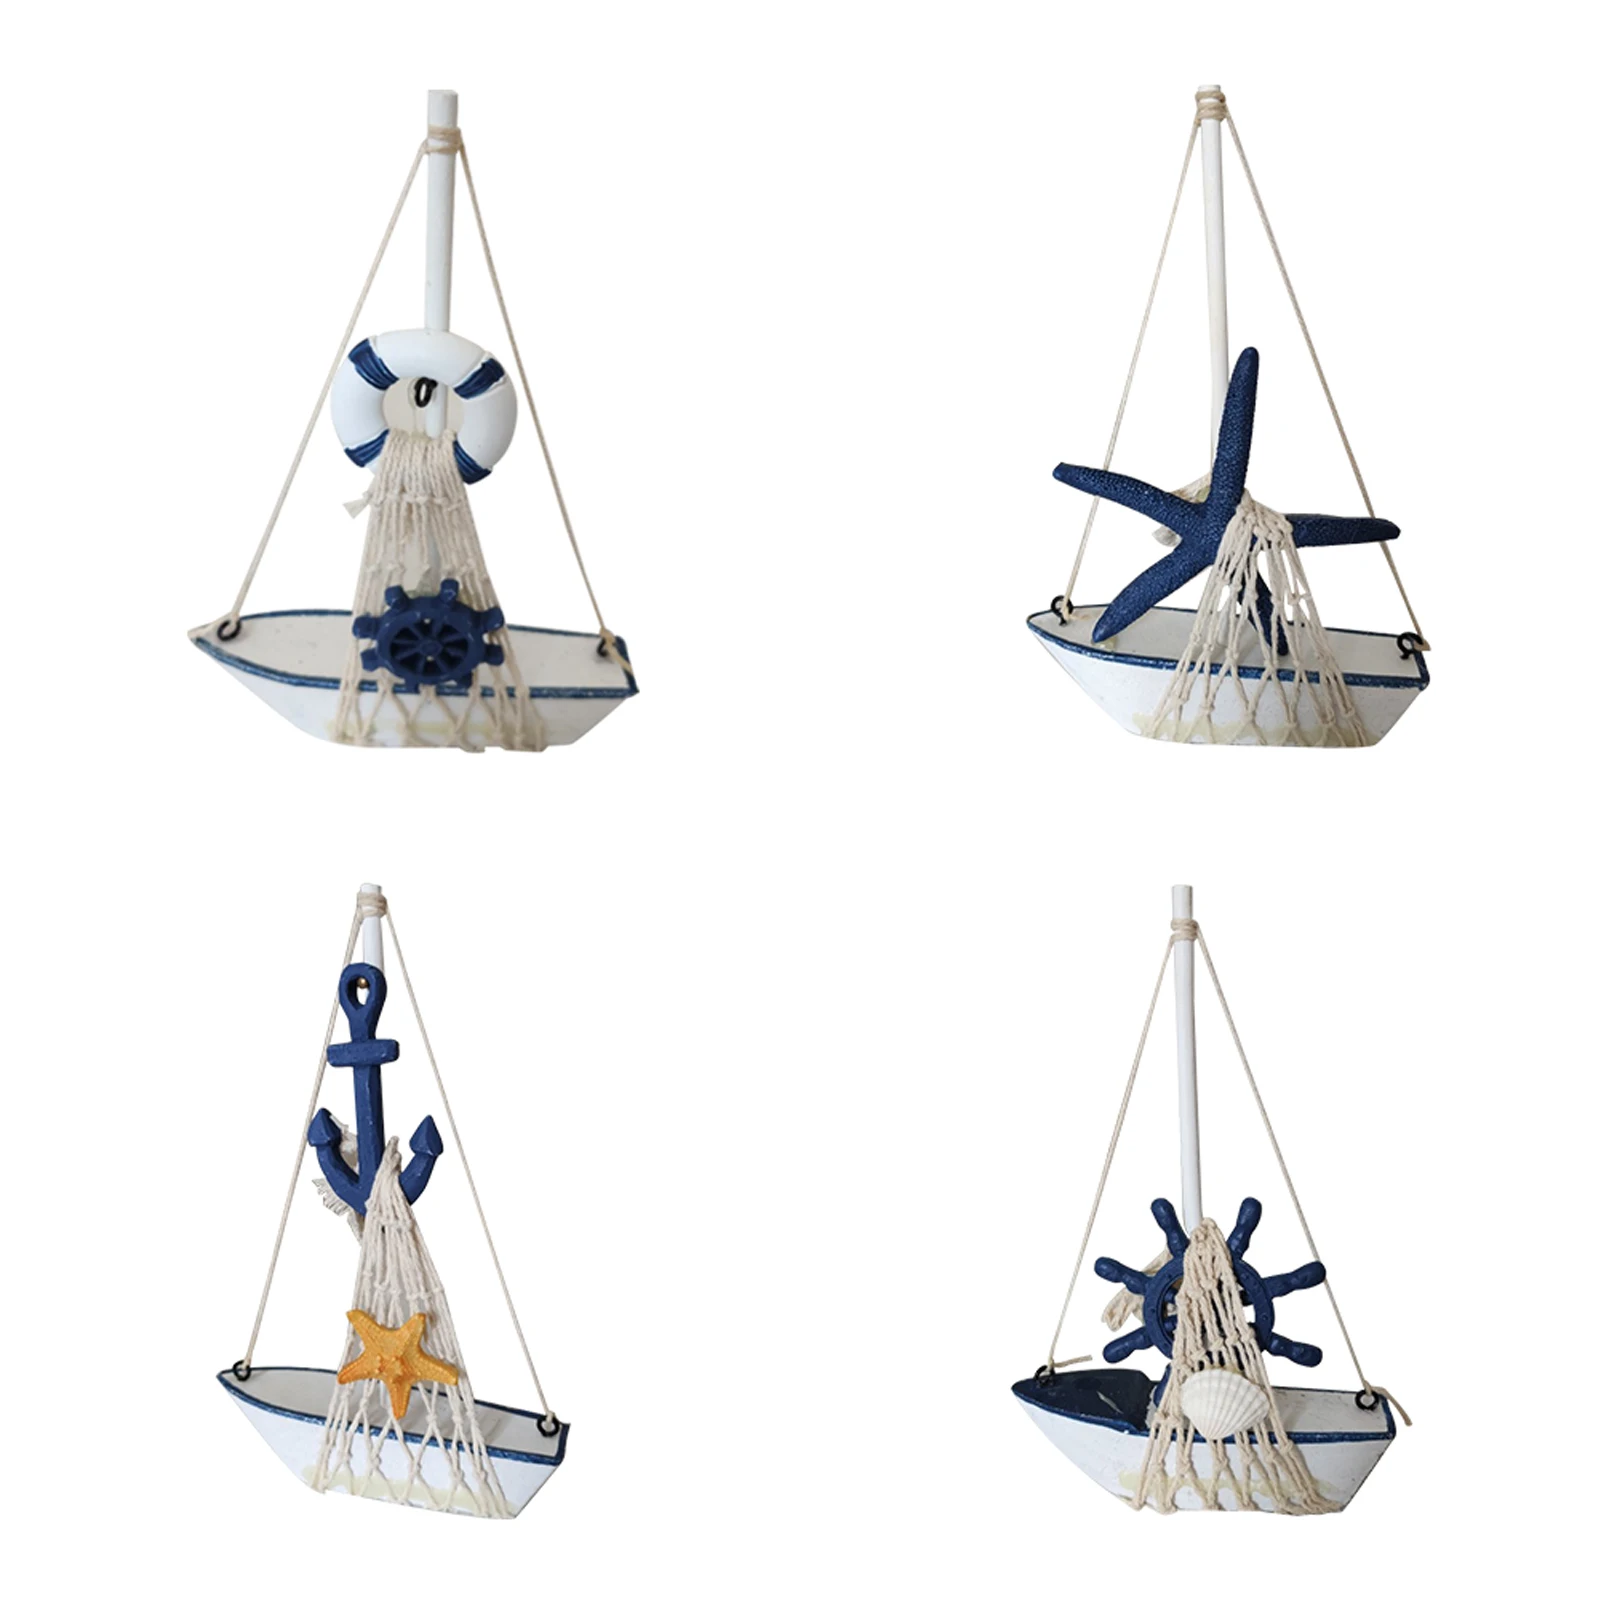 4pcs/set Desktop Cute Home Decor Wooden Sailboat Miniature Office Gift Model Mediterranean Style Display Ornament Craft